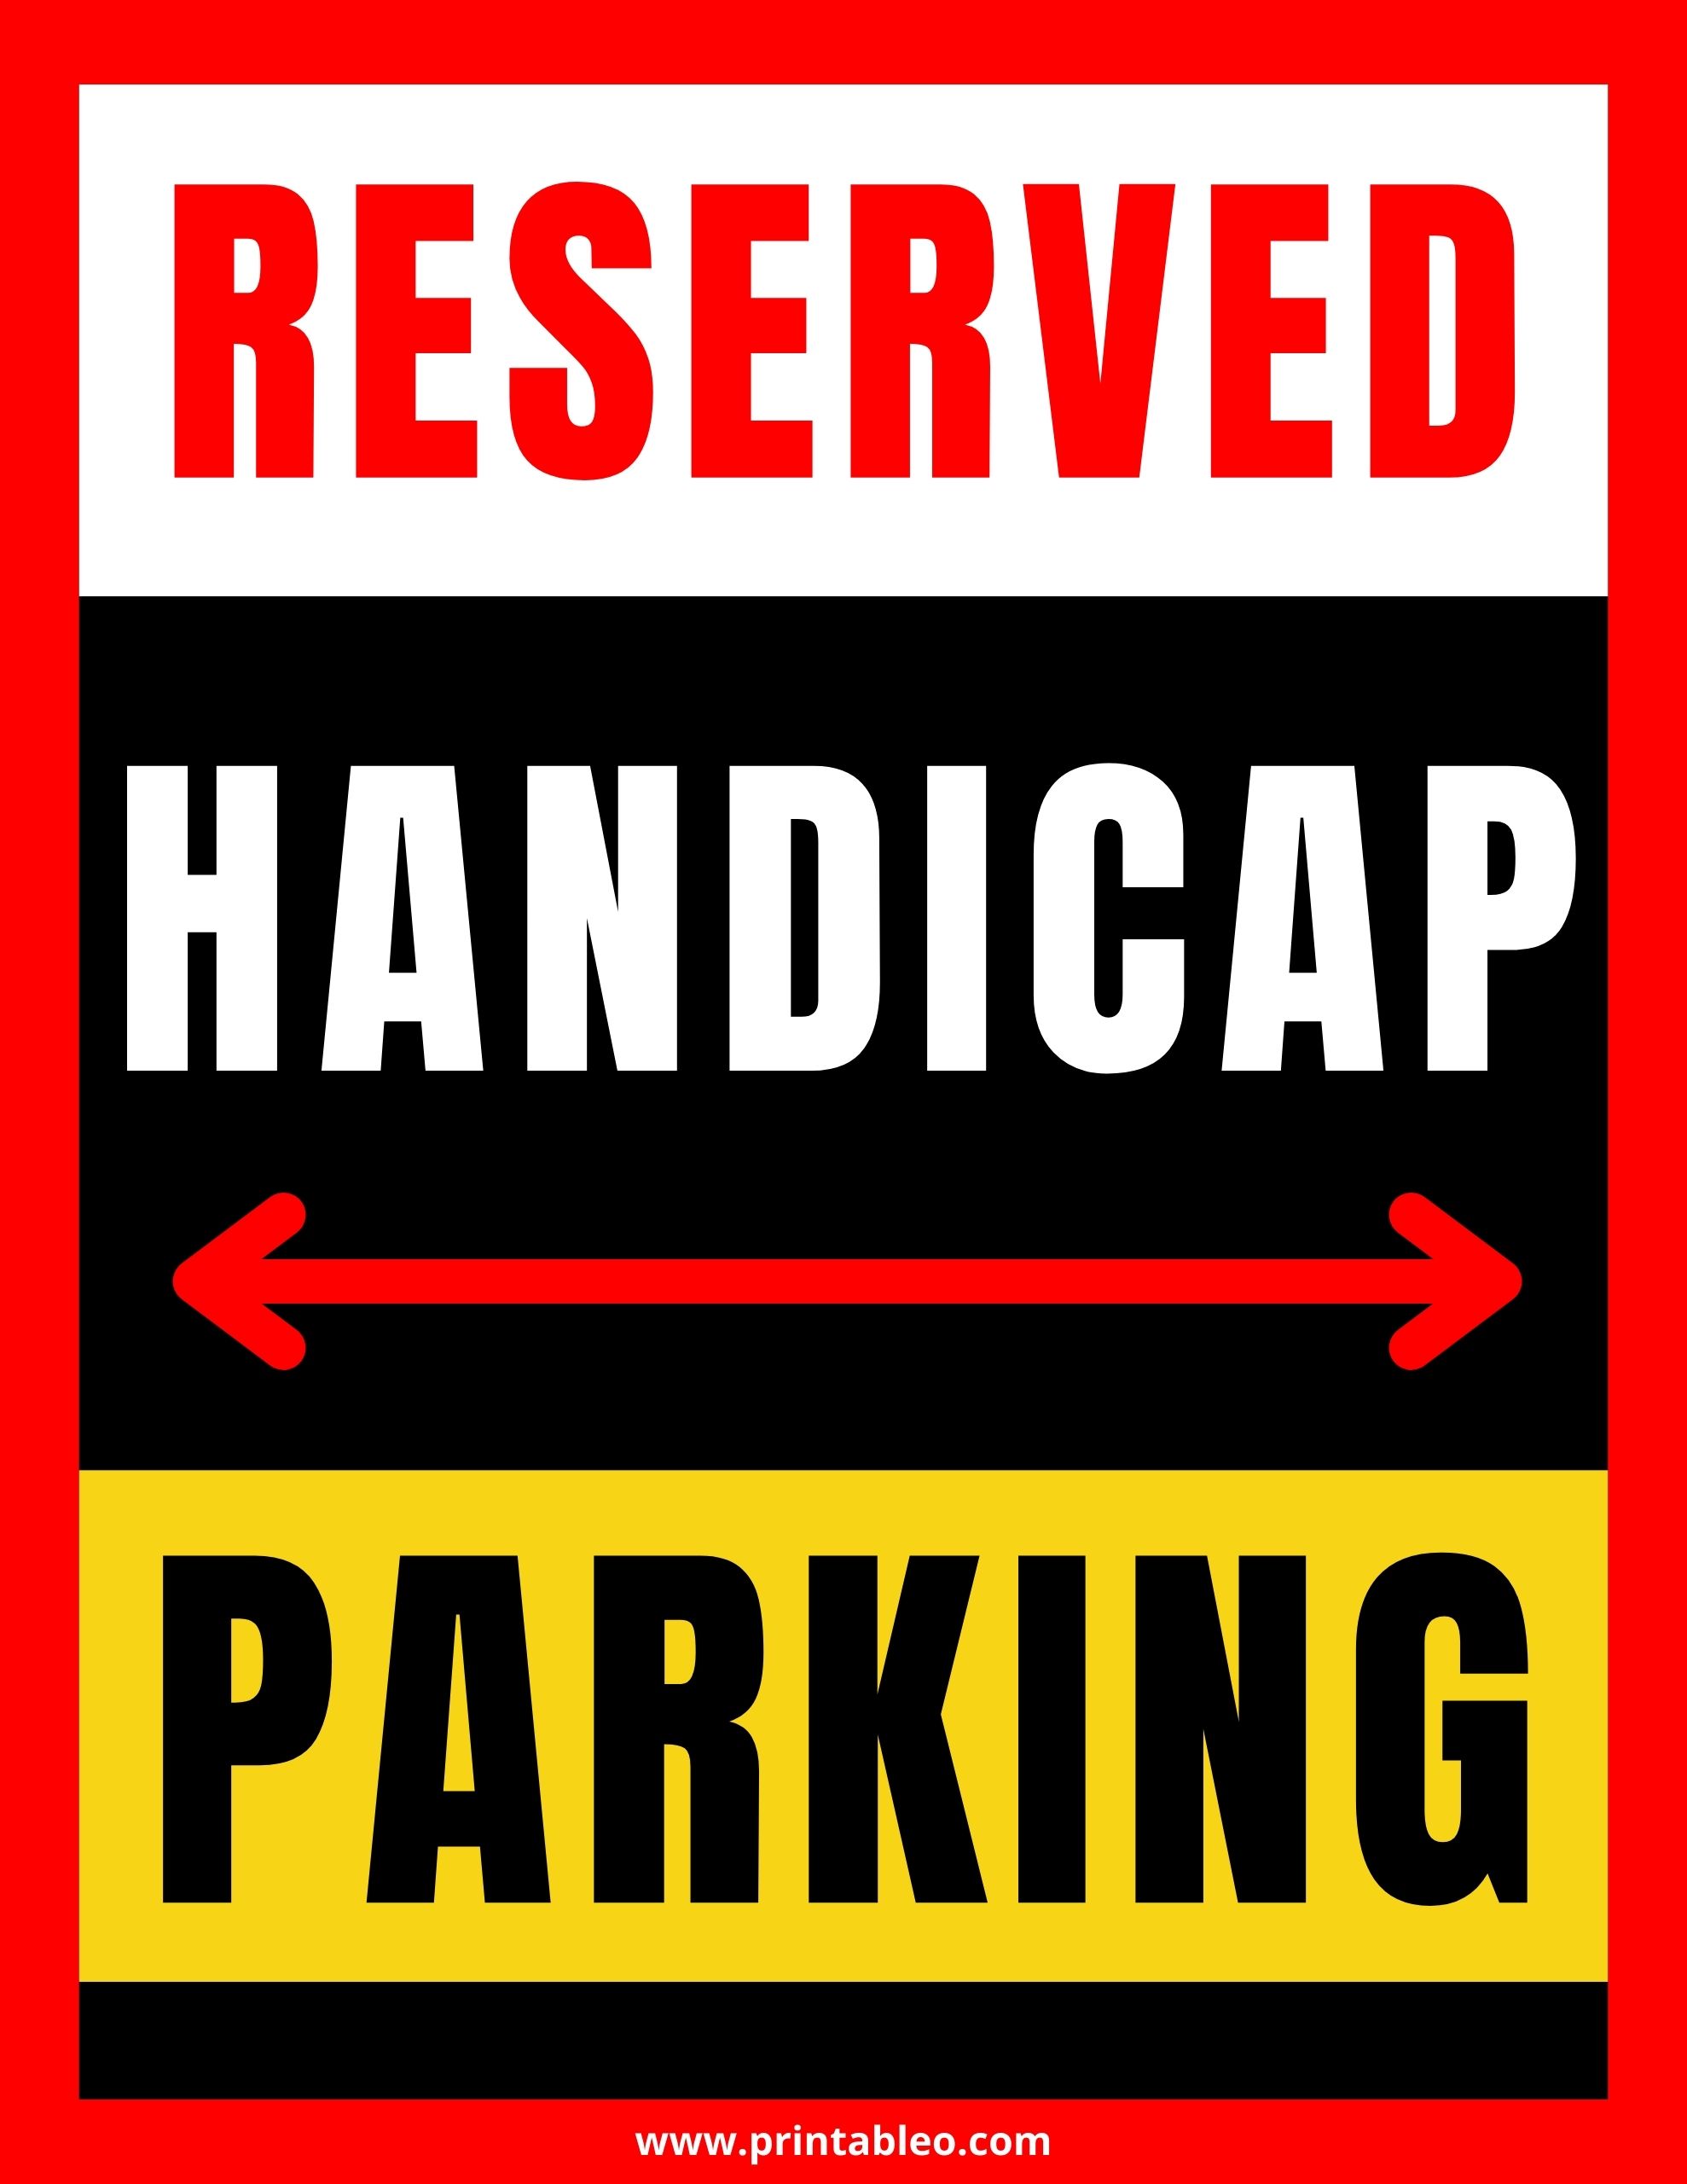 Reserved Handicap Parking Signs